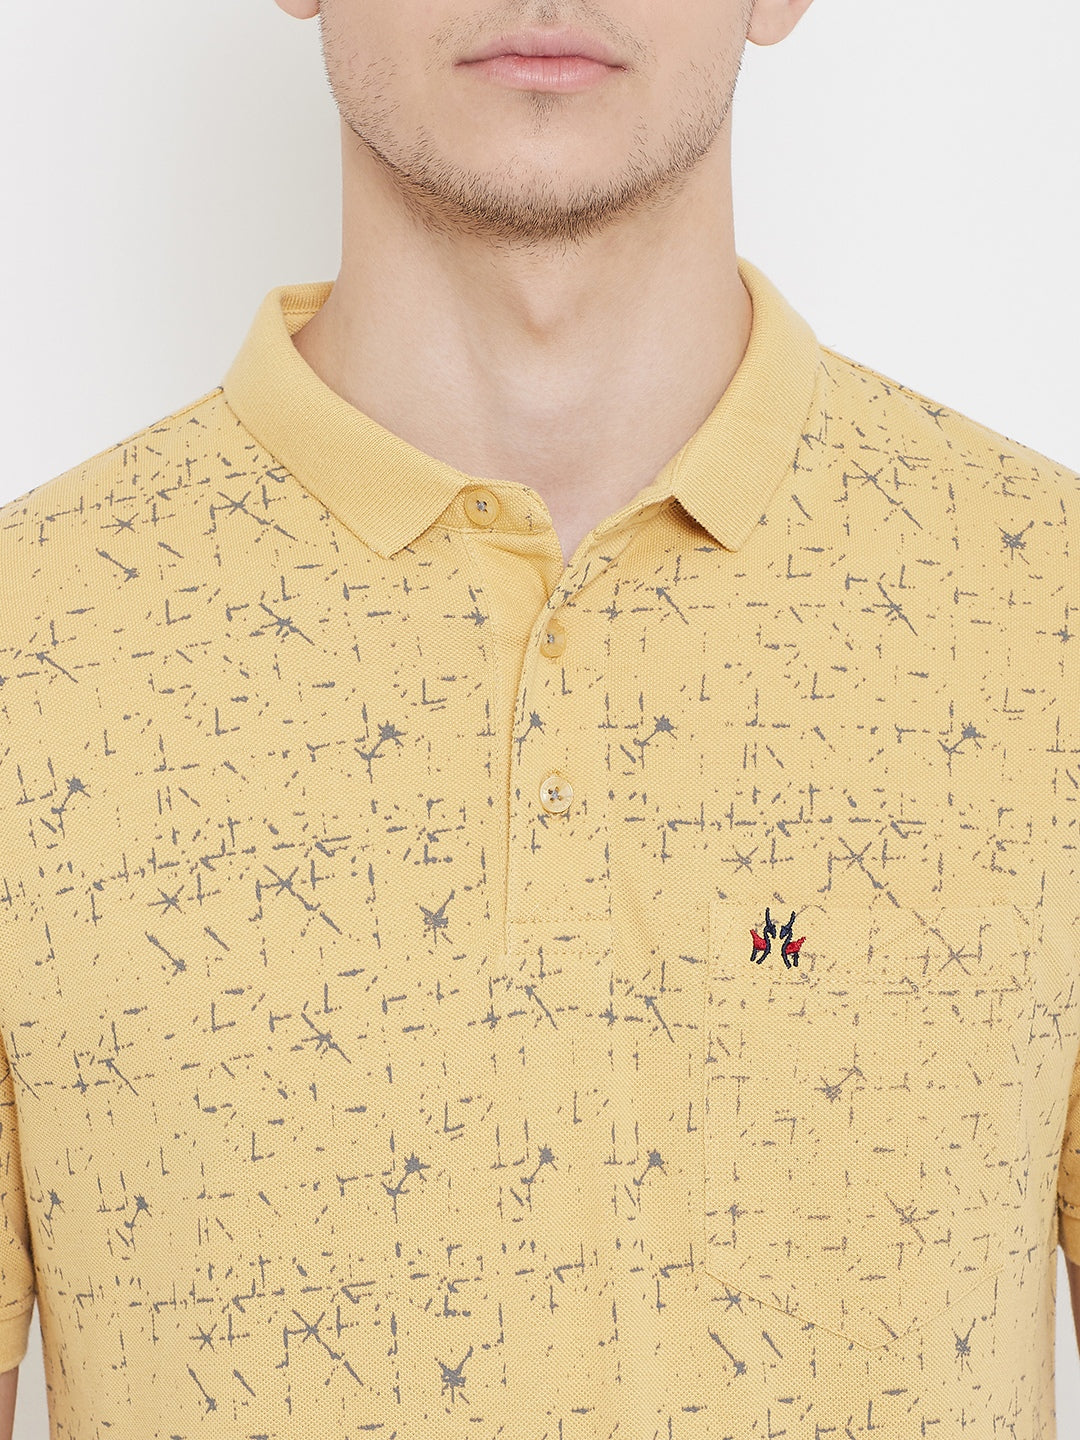 Printed Yellow T-shirt-Men T-Shirts-Crimsoune Club